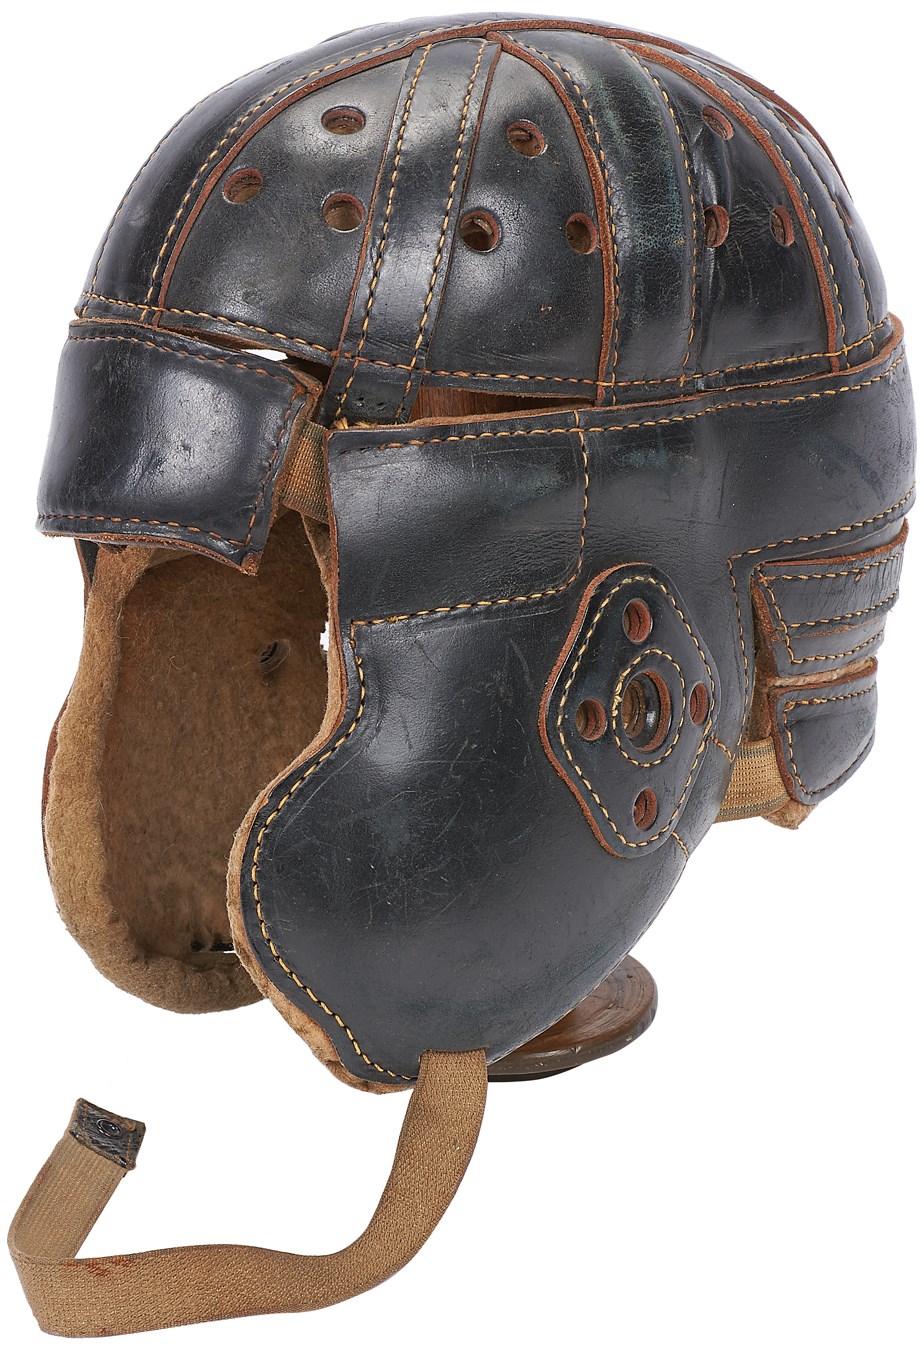 - 1920s Draper & Maynard Helmet with Elongated Ear Flaps